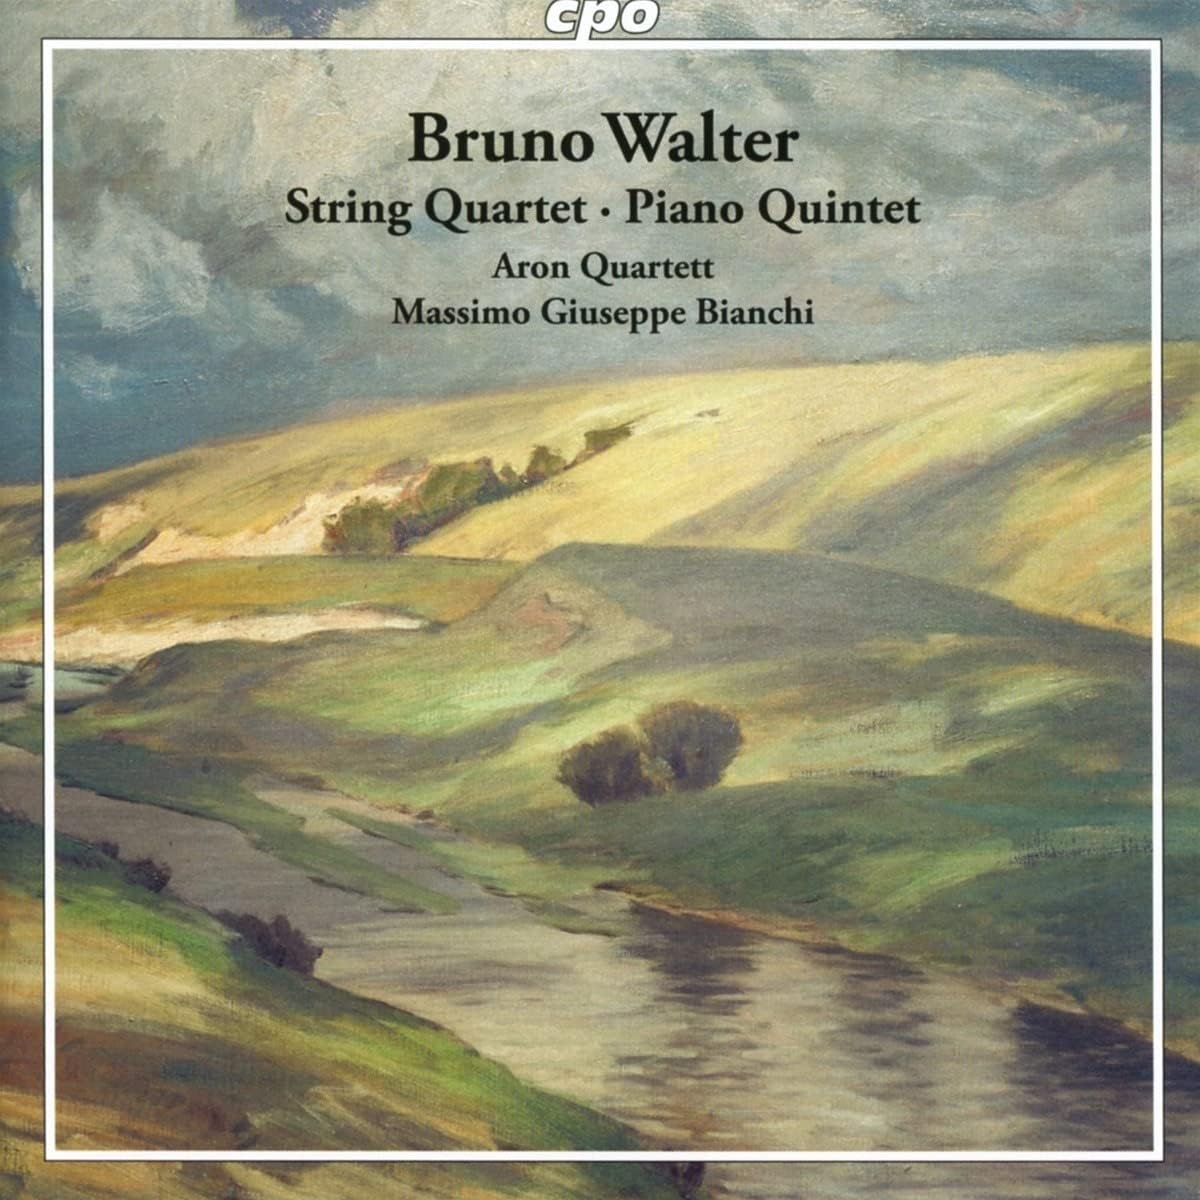 Bruno Walter, composer!